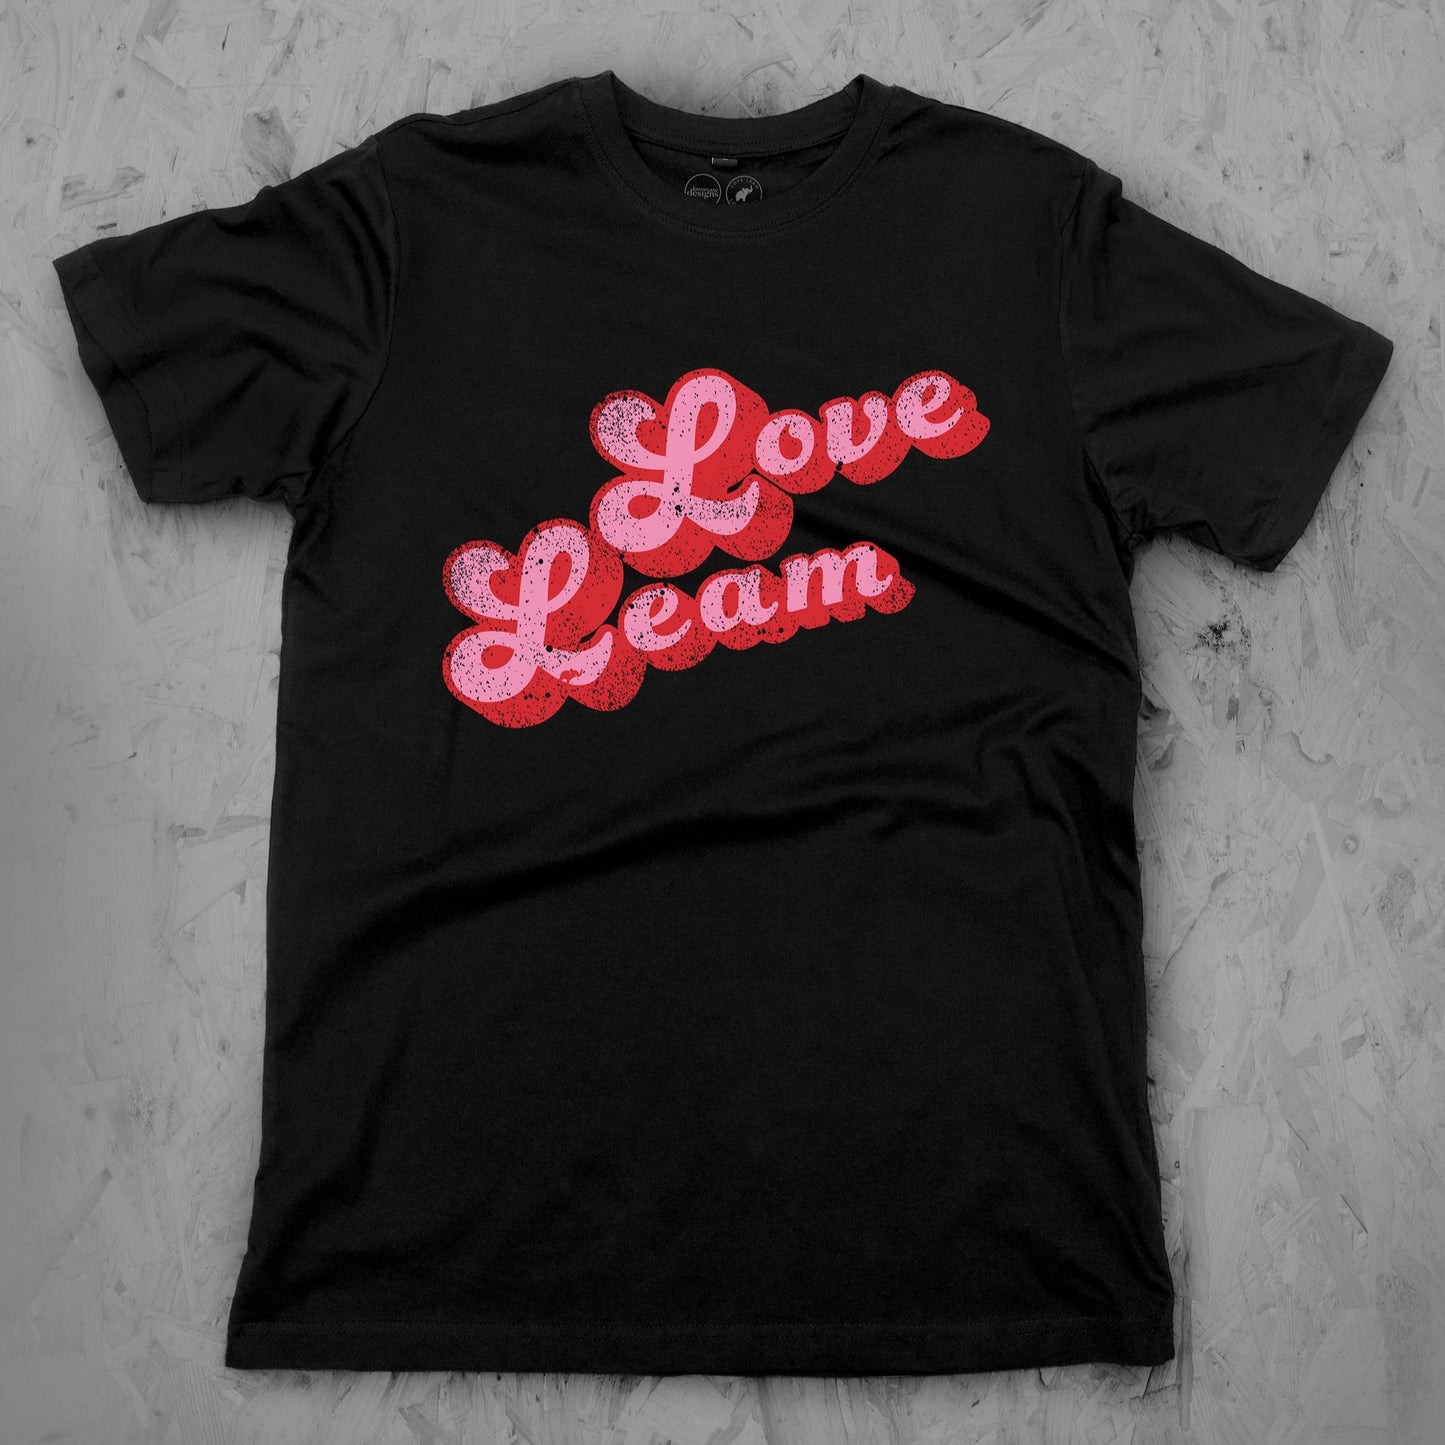 Love Leam 1 Tee